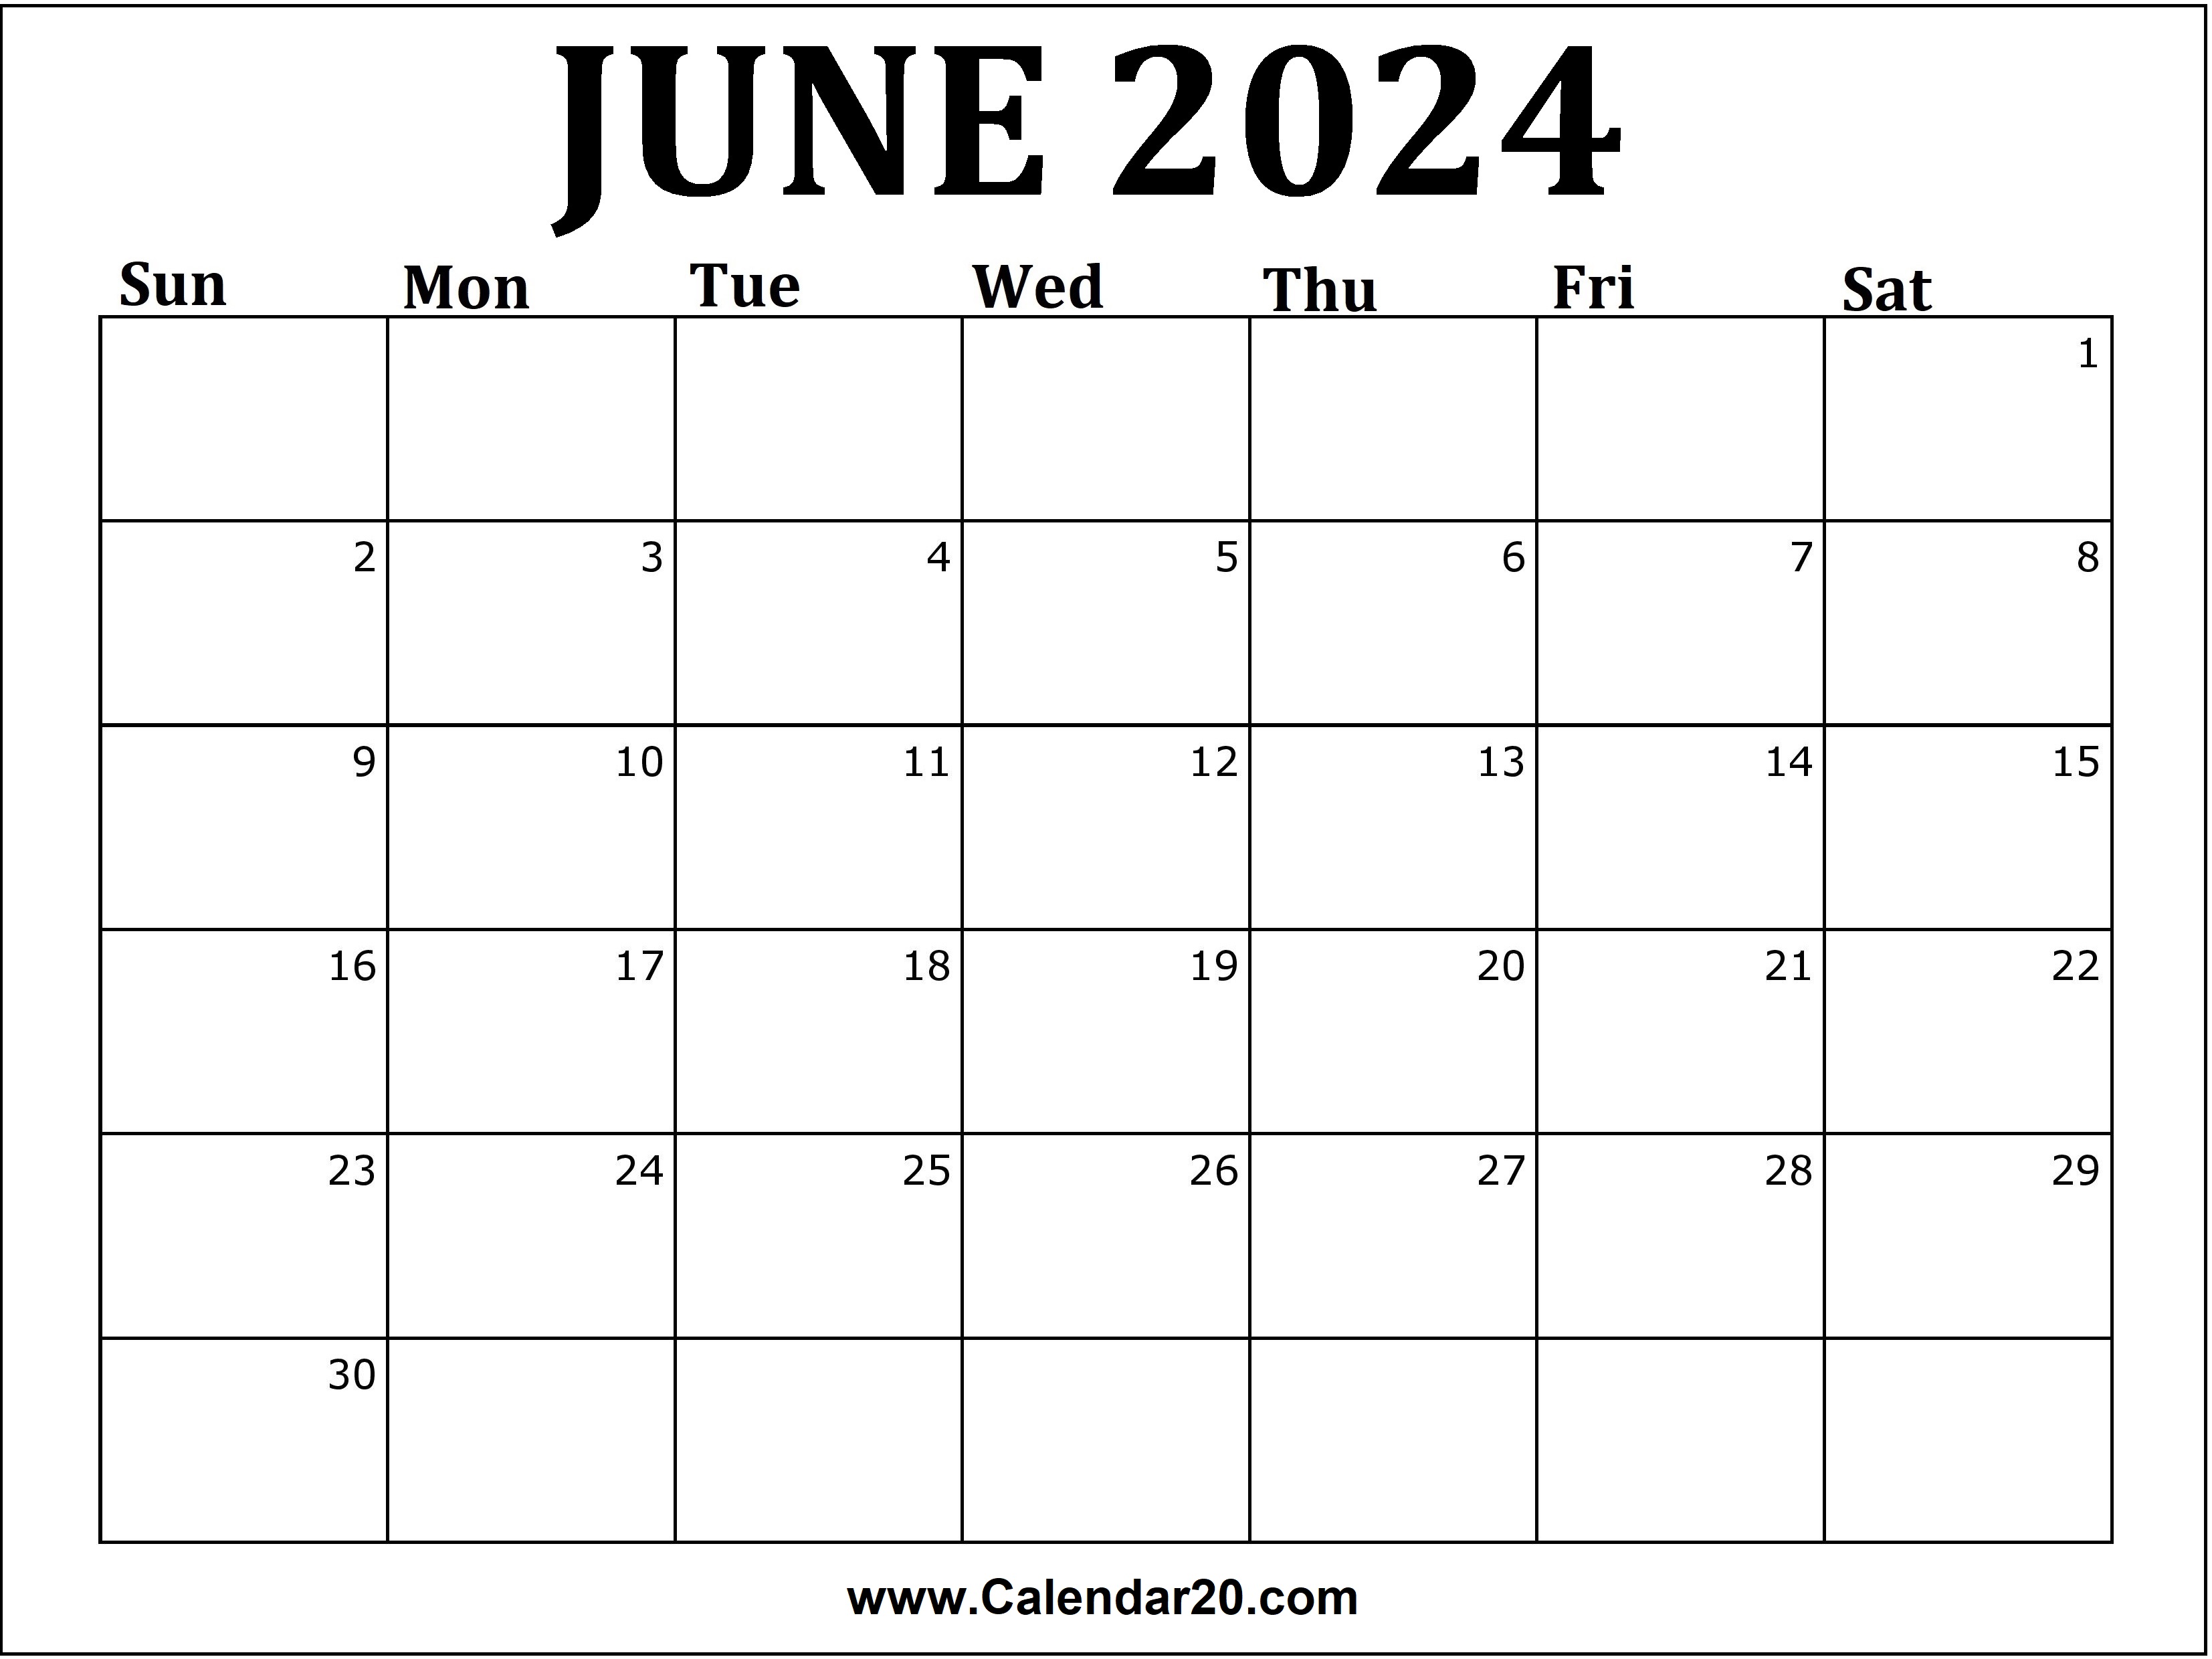 Calendar June 2024 Printable Calendar - vrogue.co